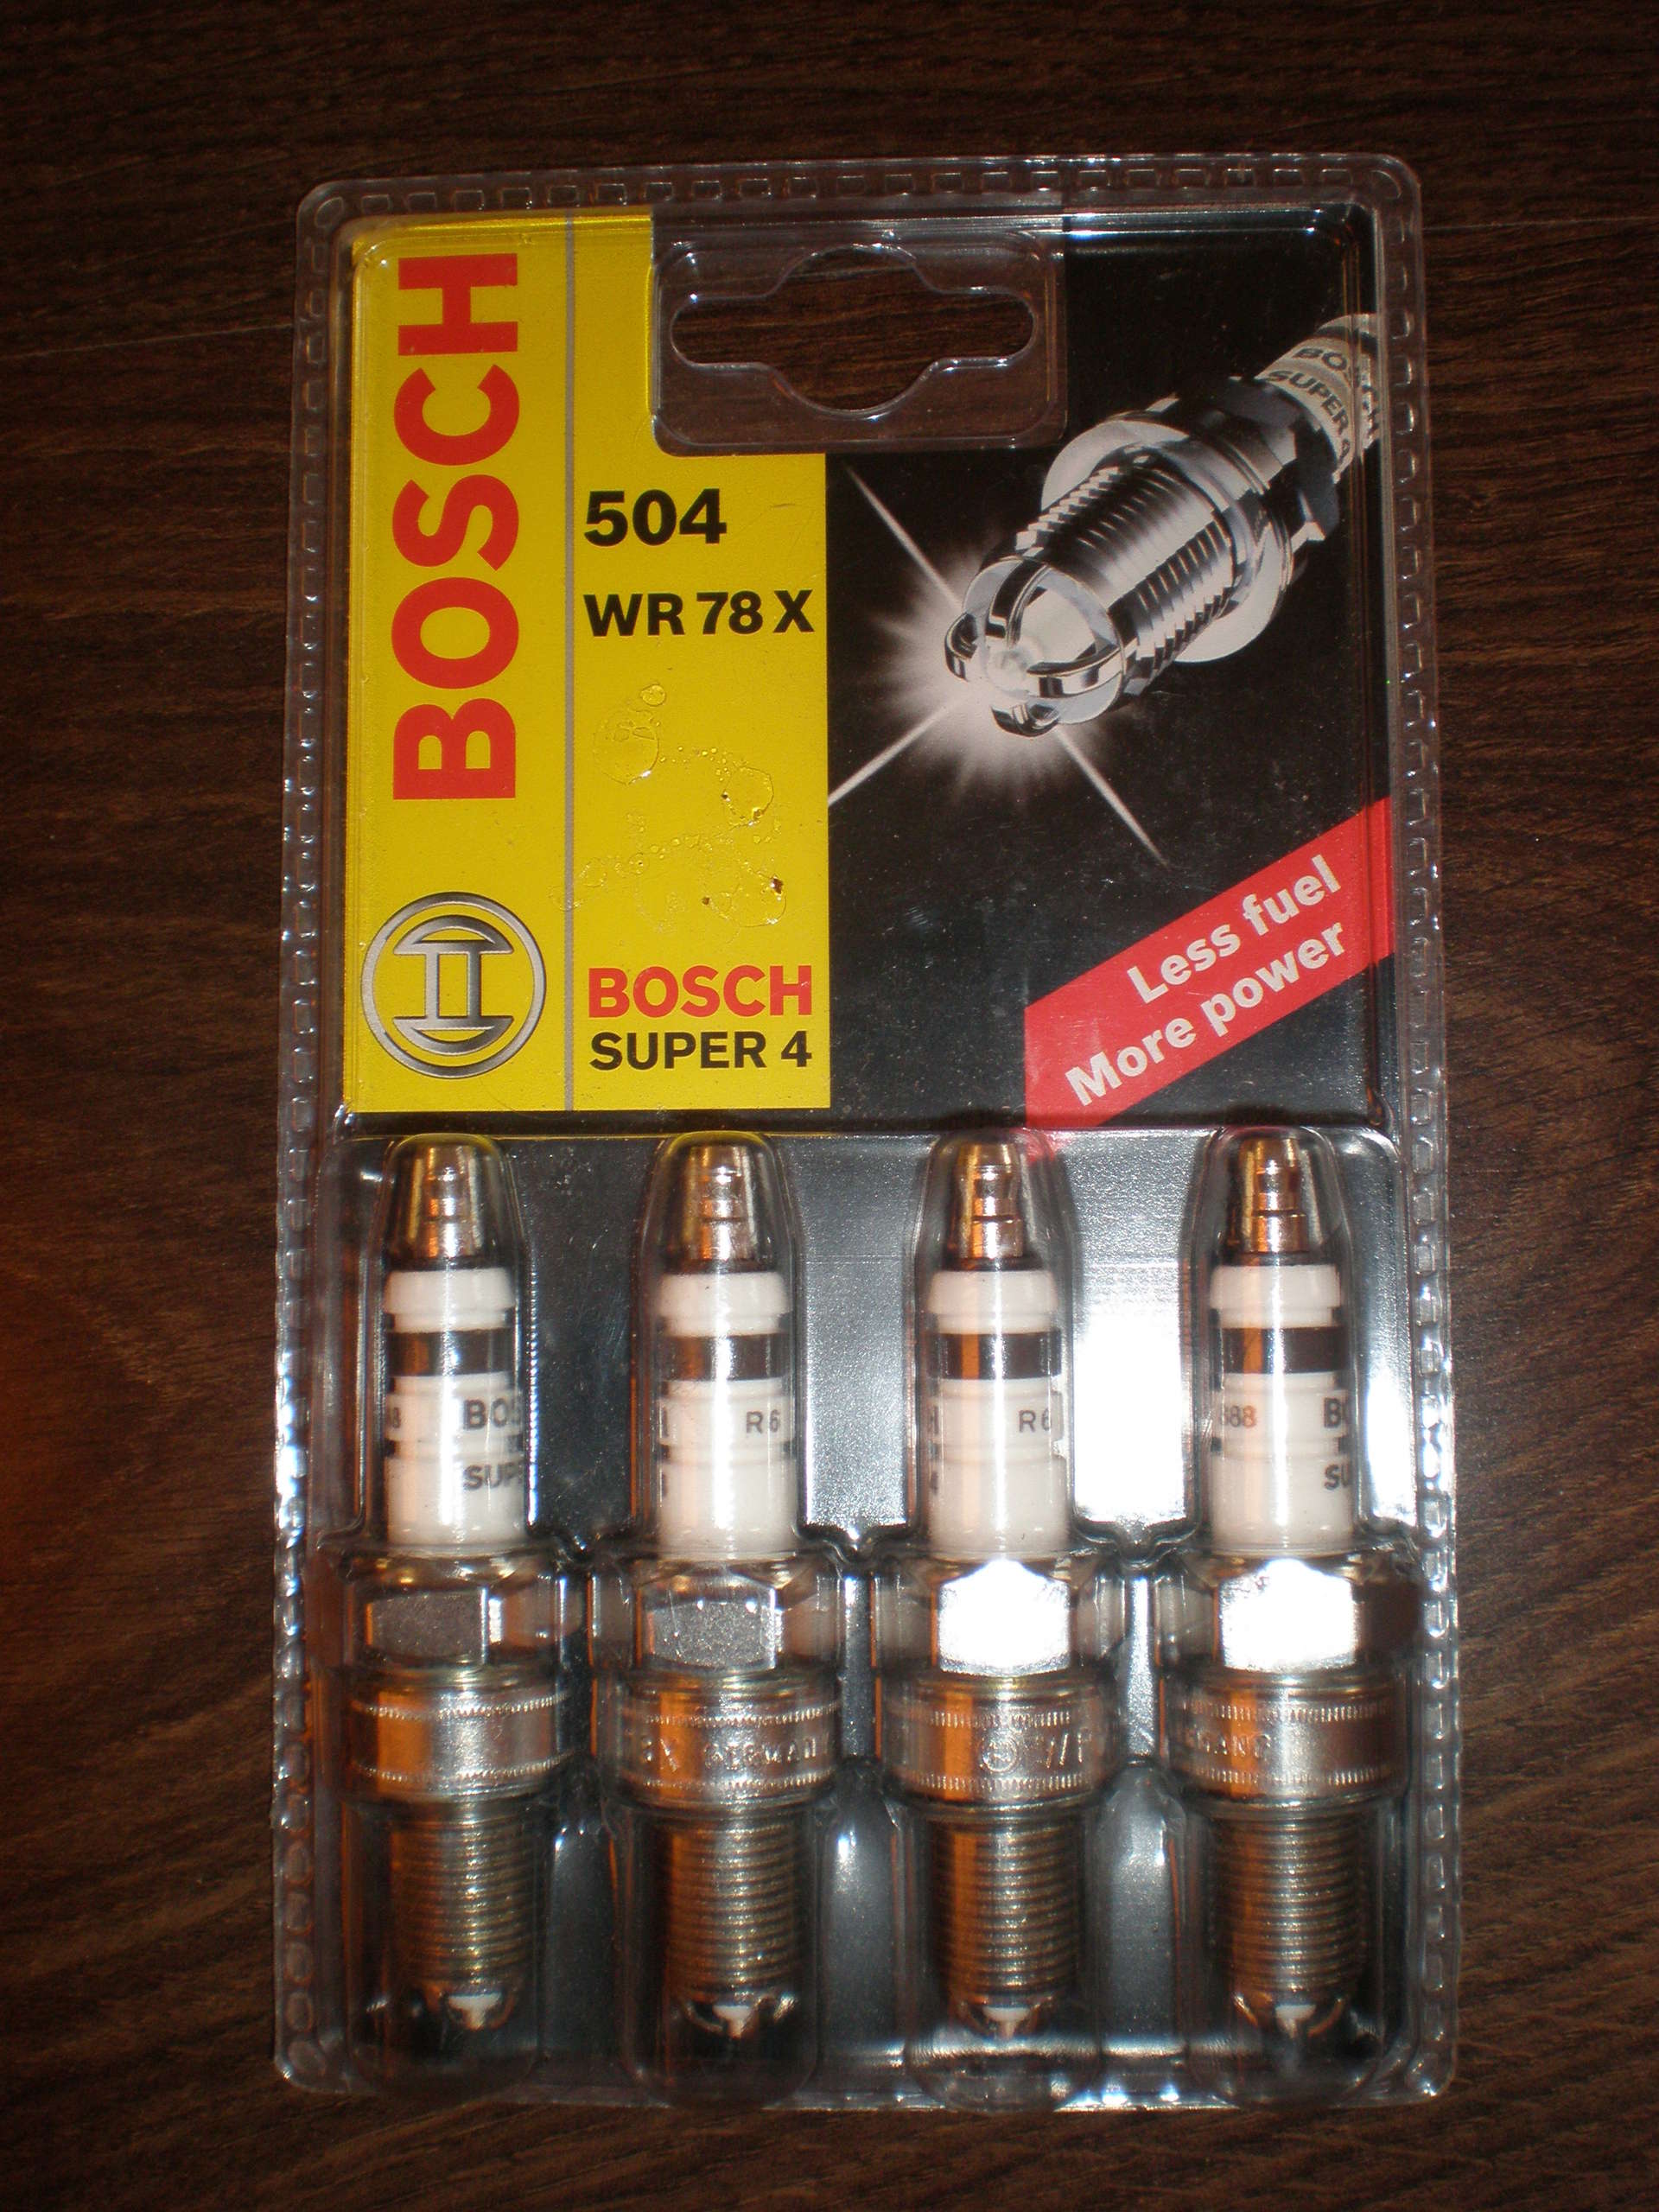 Bosch super 4. Свечи Bosch 504 wr78x. Свечи бош супер 4. Свеча "Bosch super-4" wr78 2101-07,2108-2110 0,8мм (4-х электр). Свечи зажигания Bosch super 4 Plus.